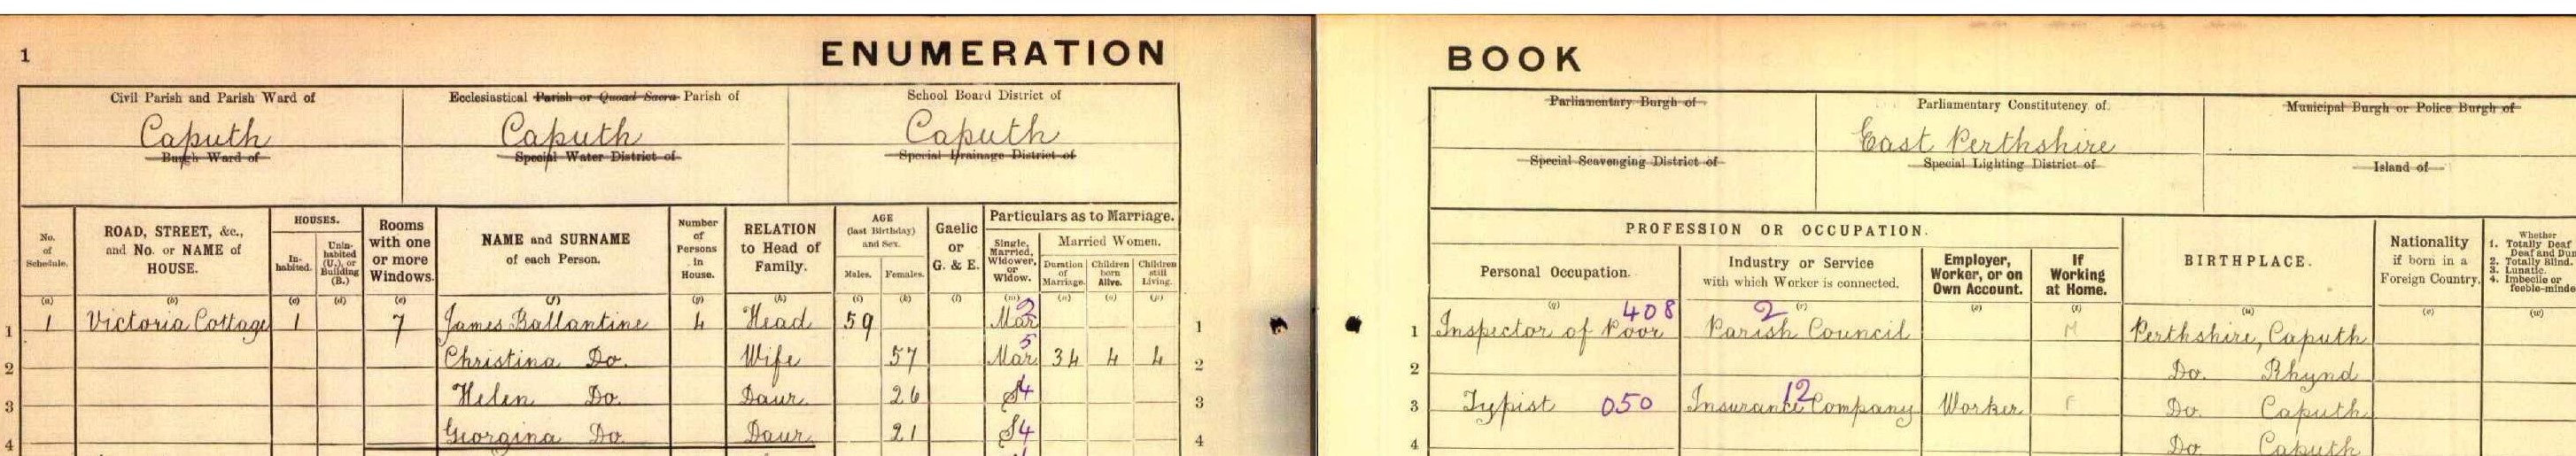 Georgina Ballantine enumerated in the 1911 census